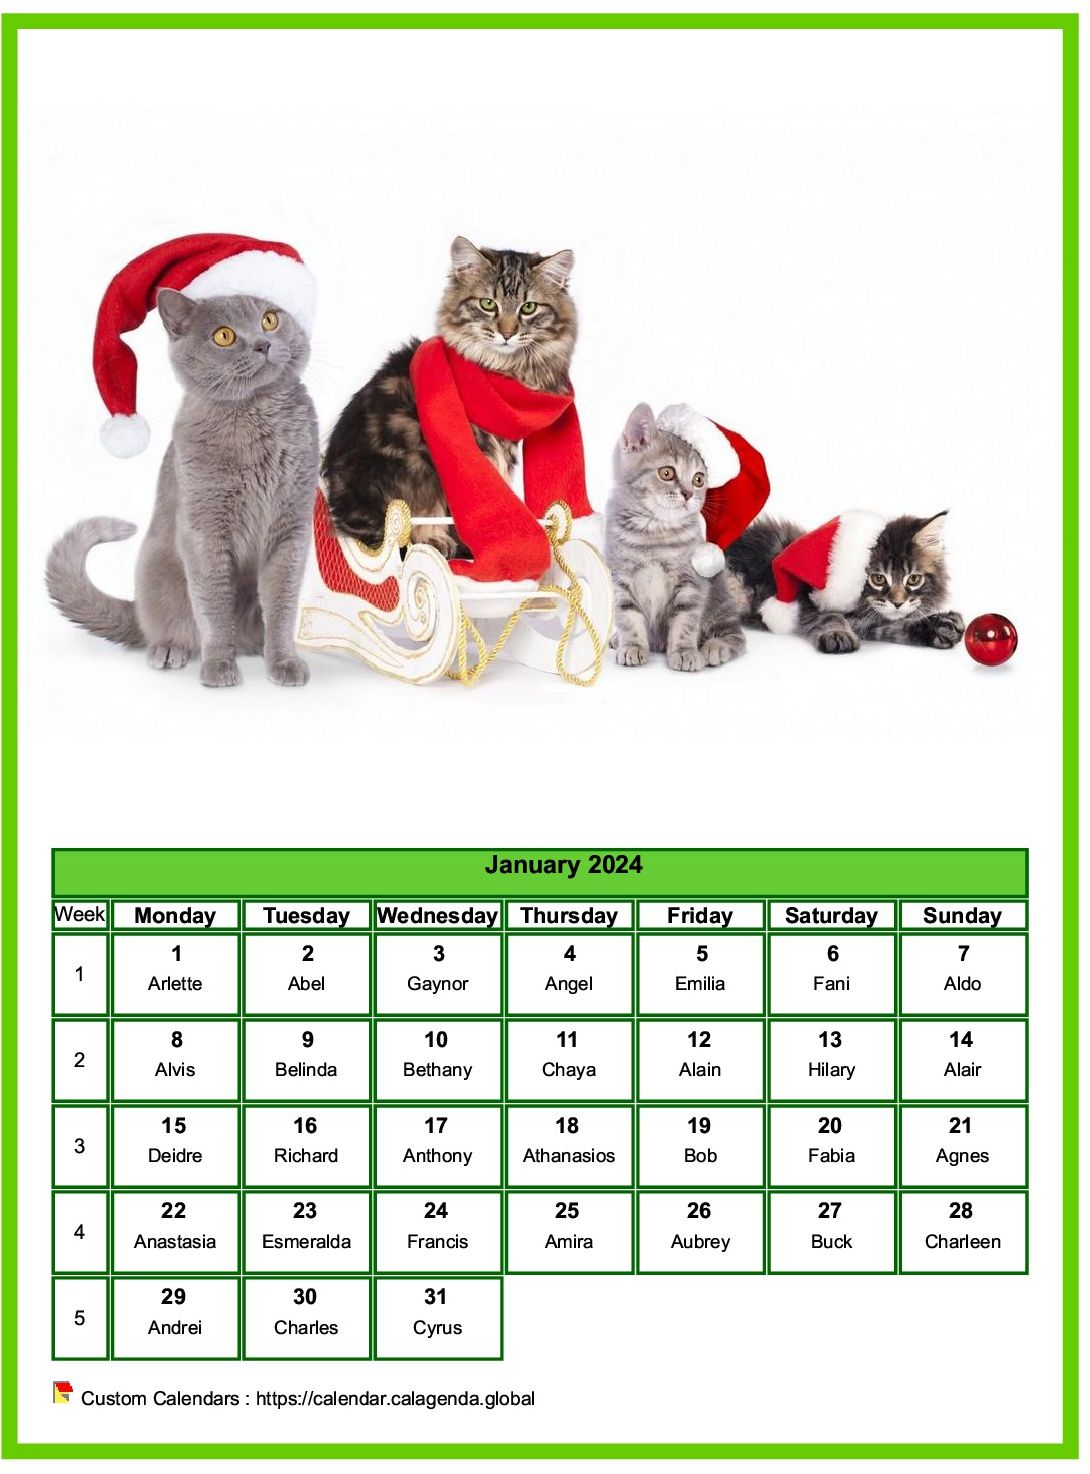 Calendar january 2024 cats